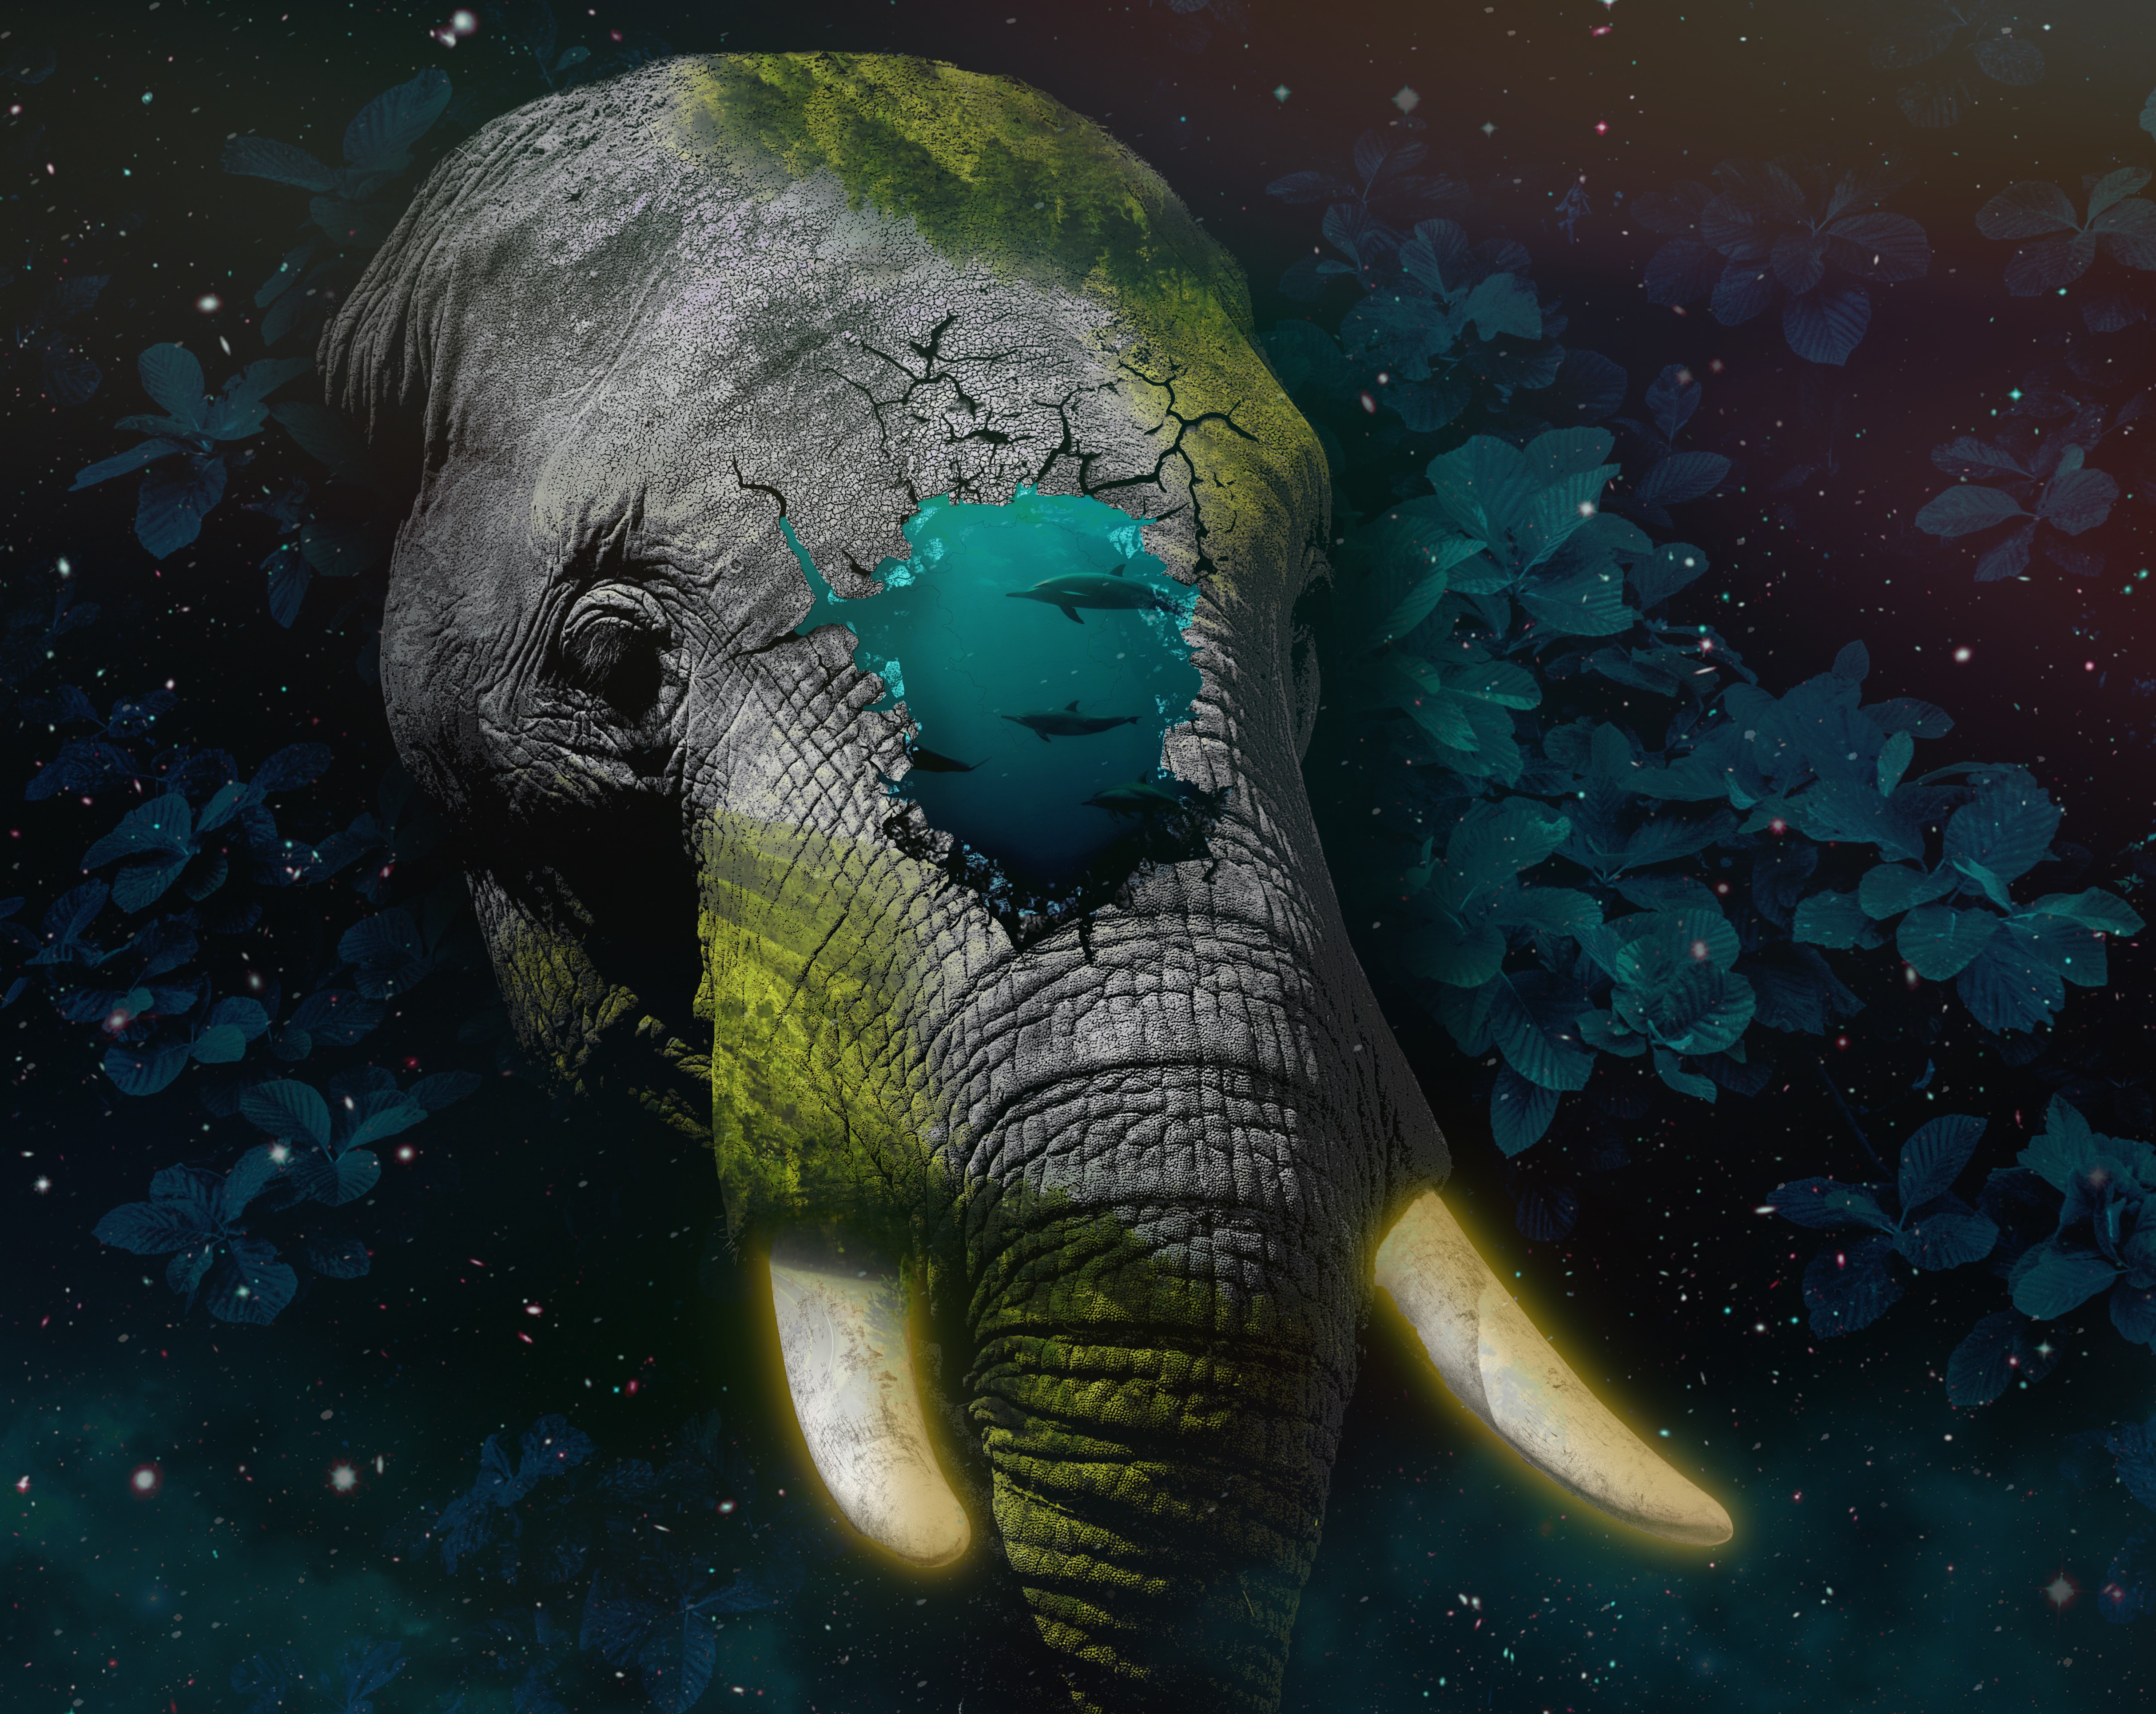 Elephantasy by Lia Panidara